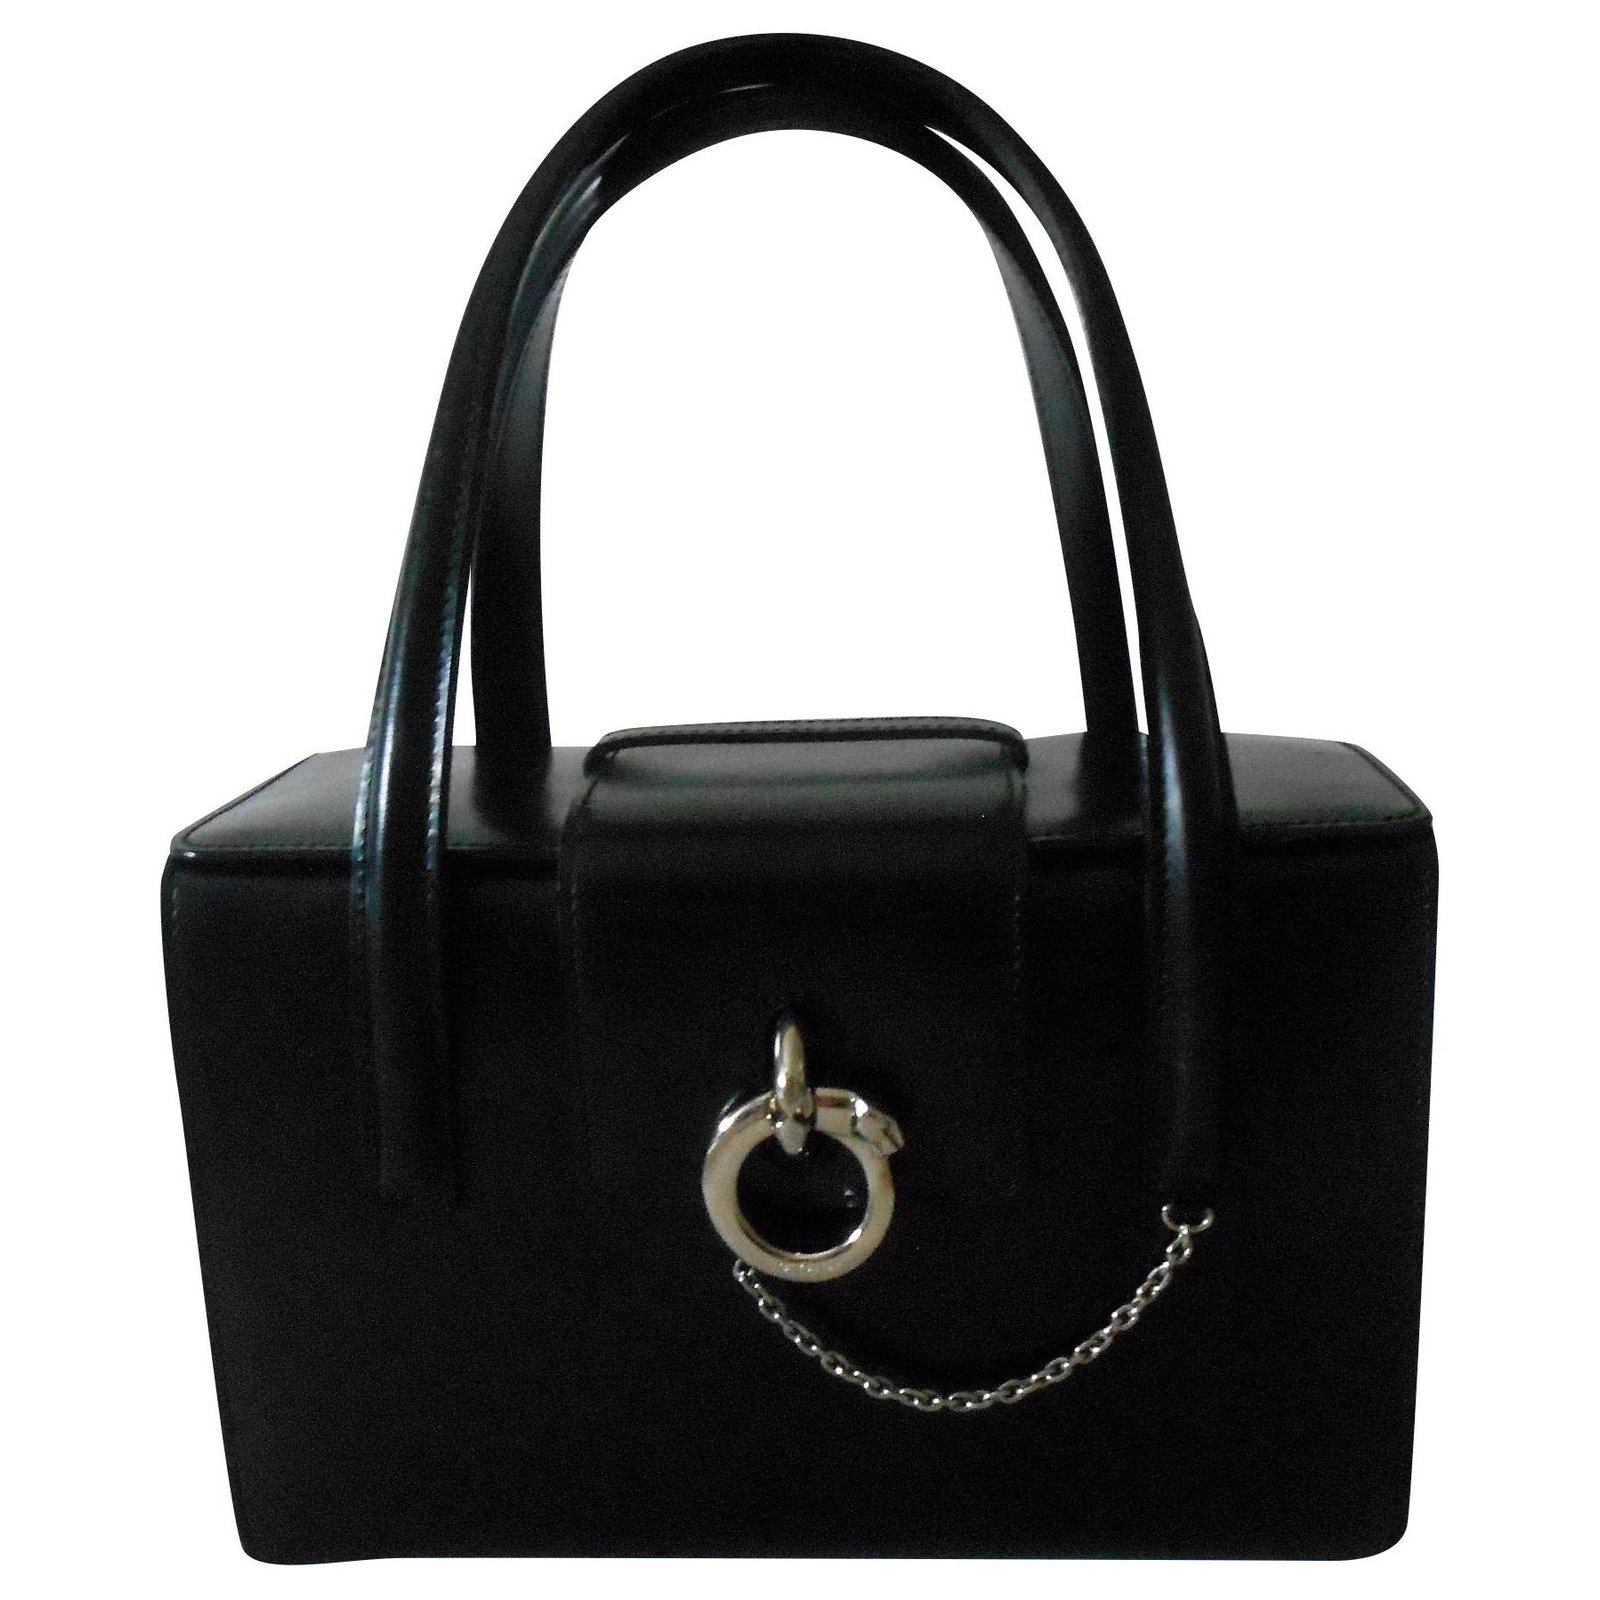 Cartier Cartier handbag Handbags 